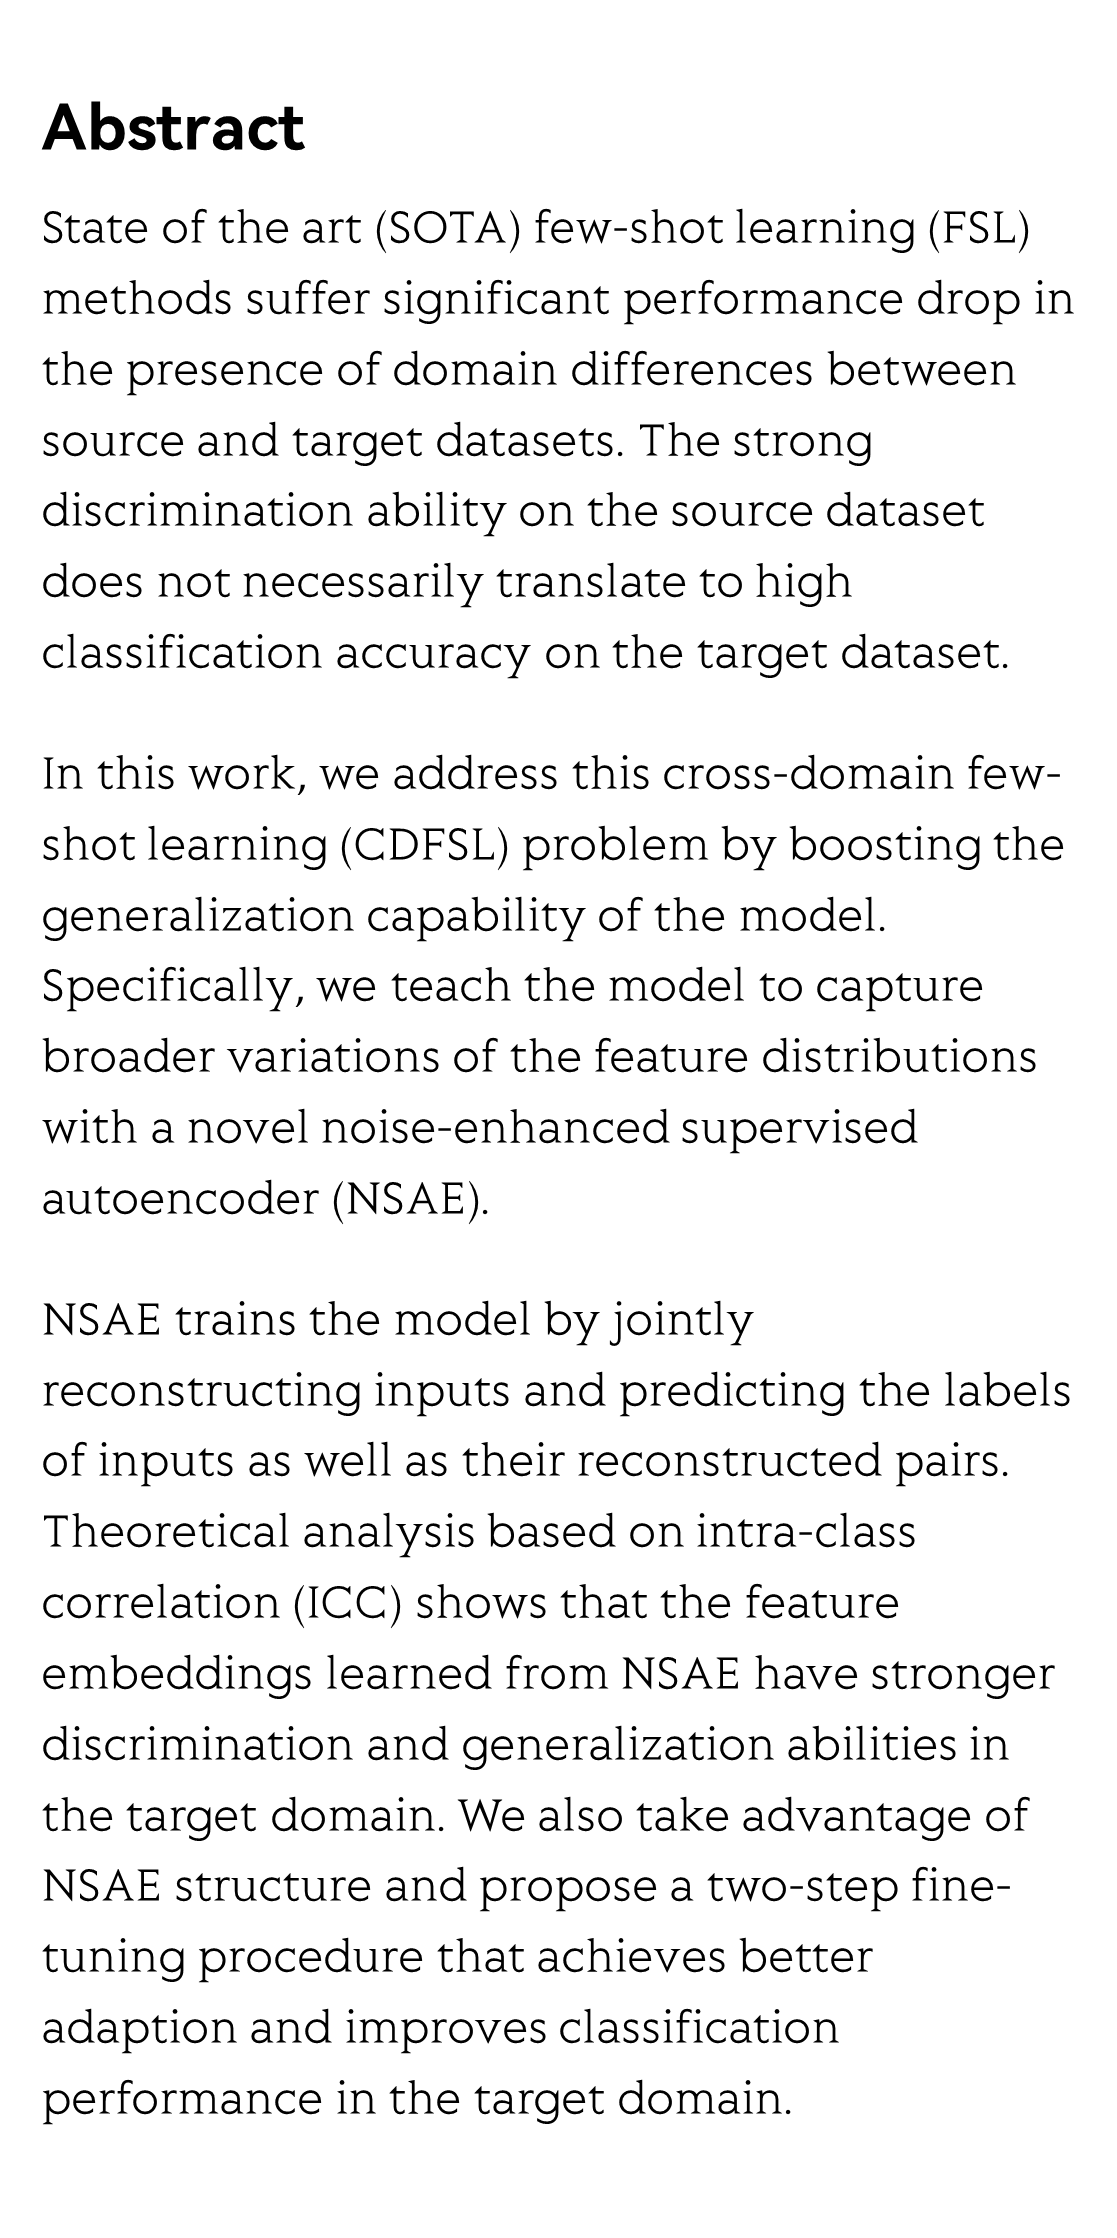 Boosting the Generalization Capability in Cross-Domain Few-shot Learning via Noise-enhanced Supervised Autoencoder_2